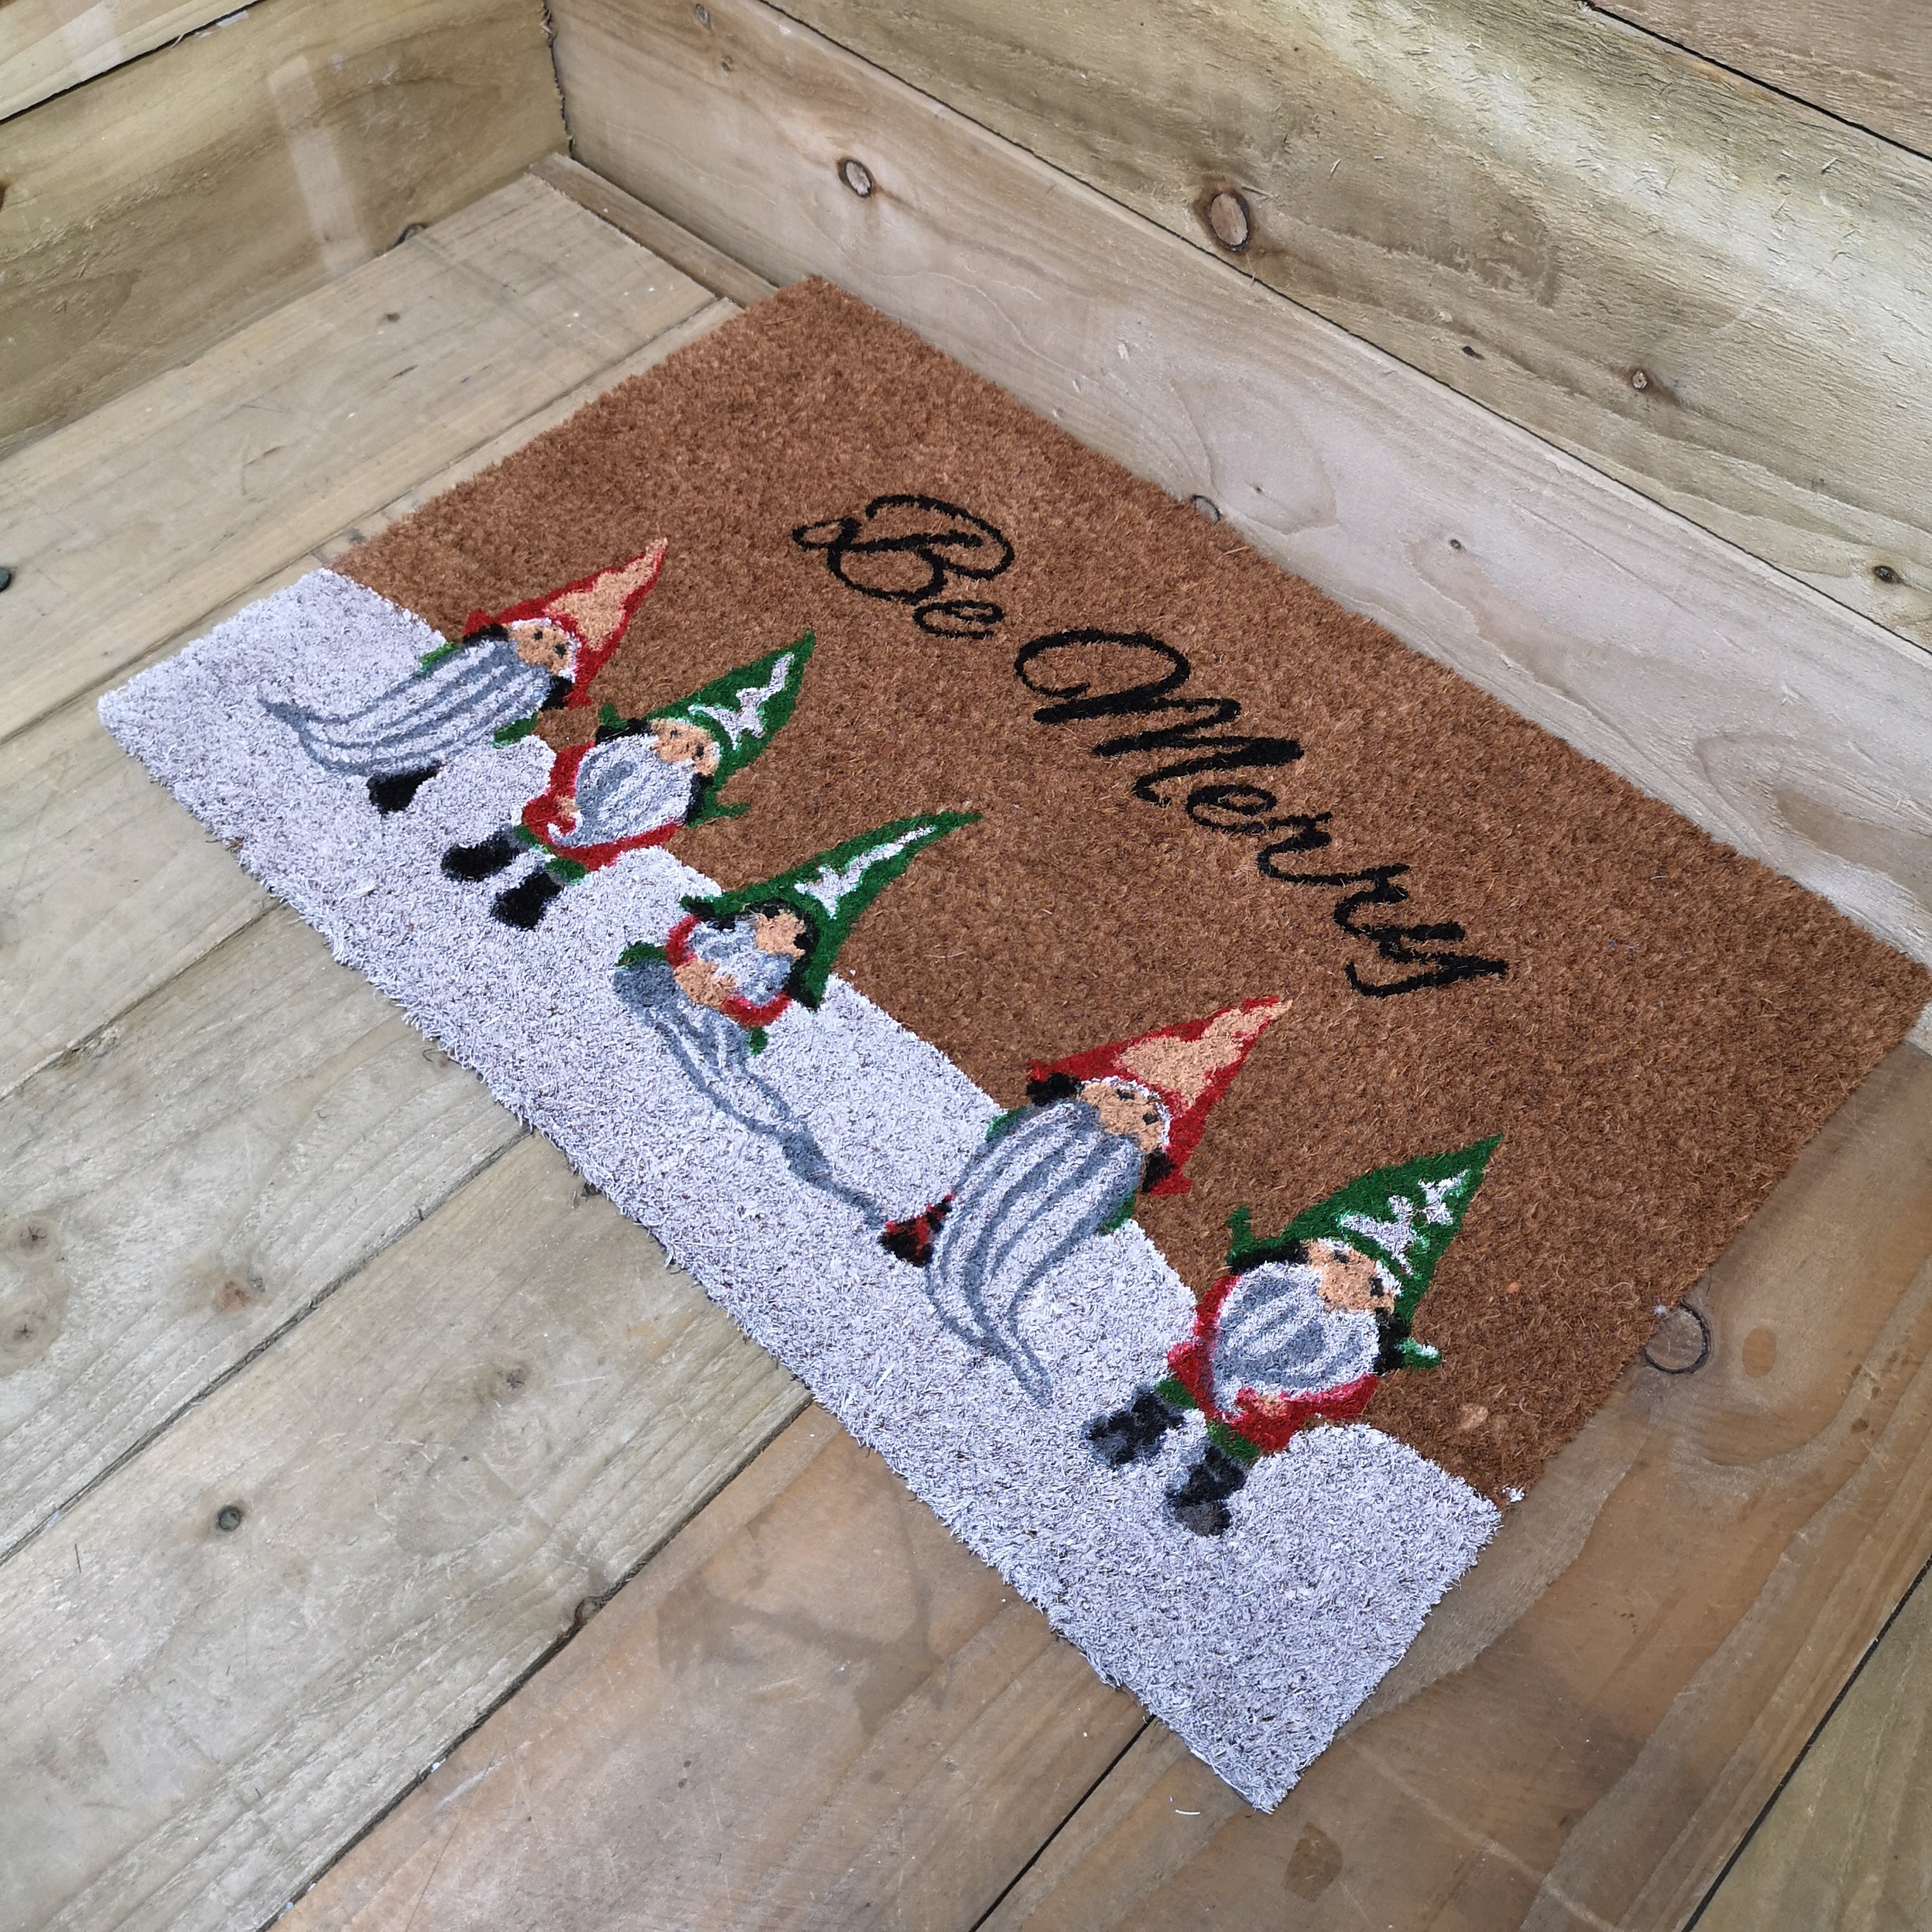 40 x 60cm Be Merry Christmas Gonk Gnomes Door Mat - Be Merry